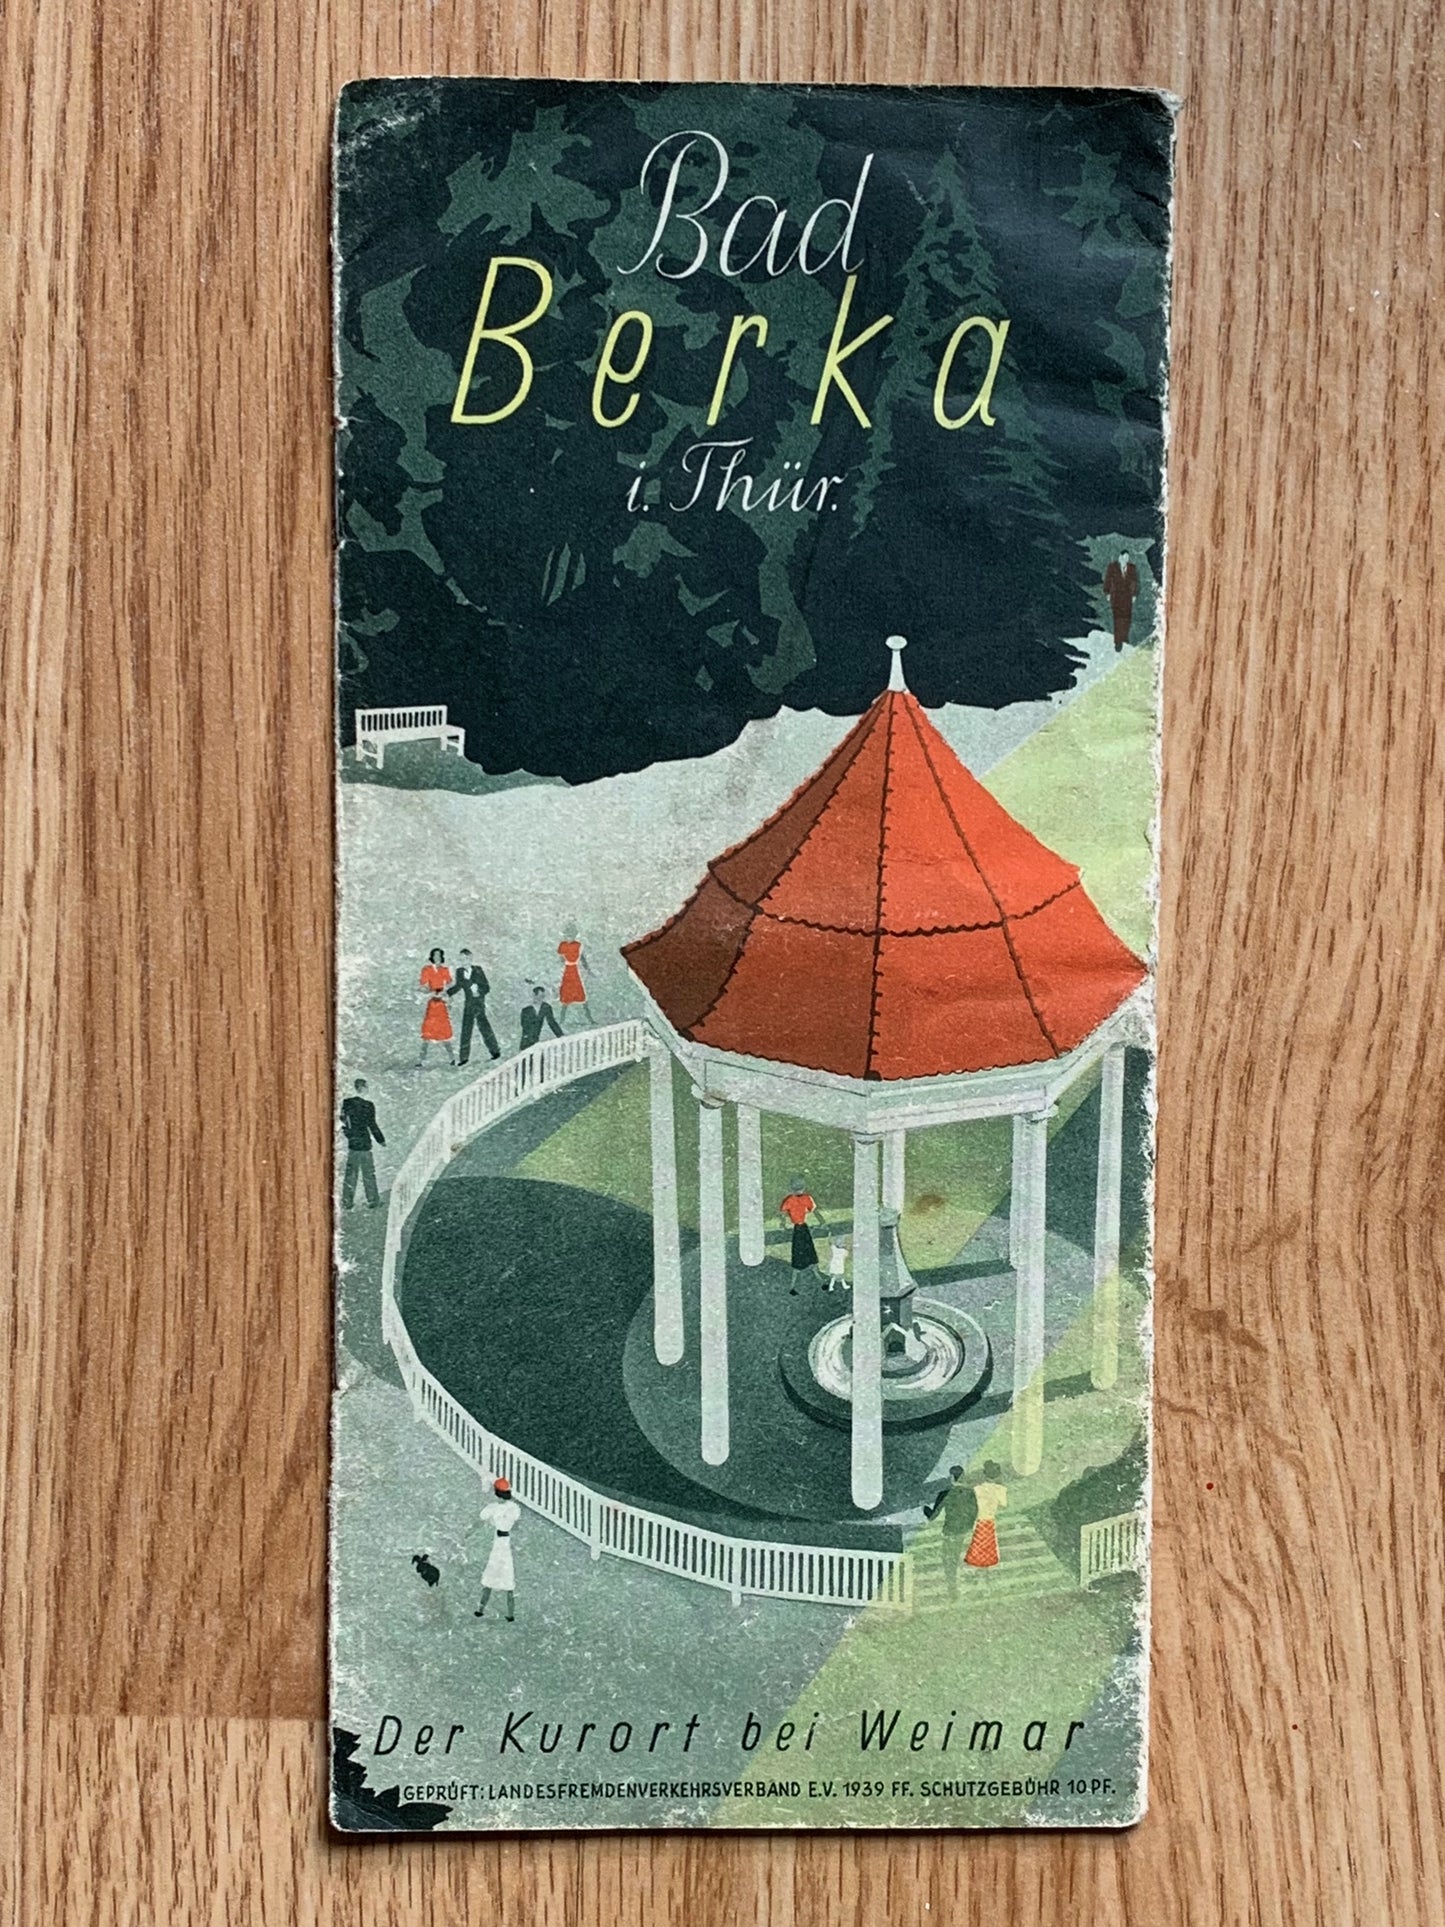 German 1939 tourism pamphlet - Bad Berka spa